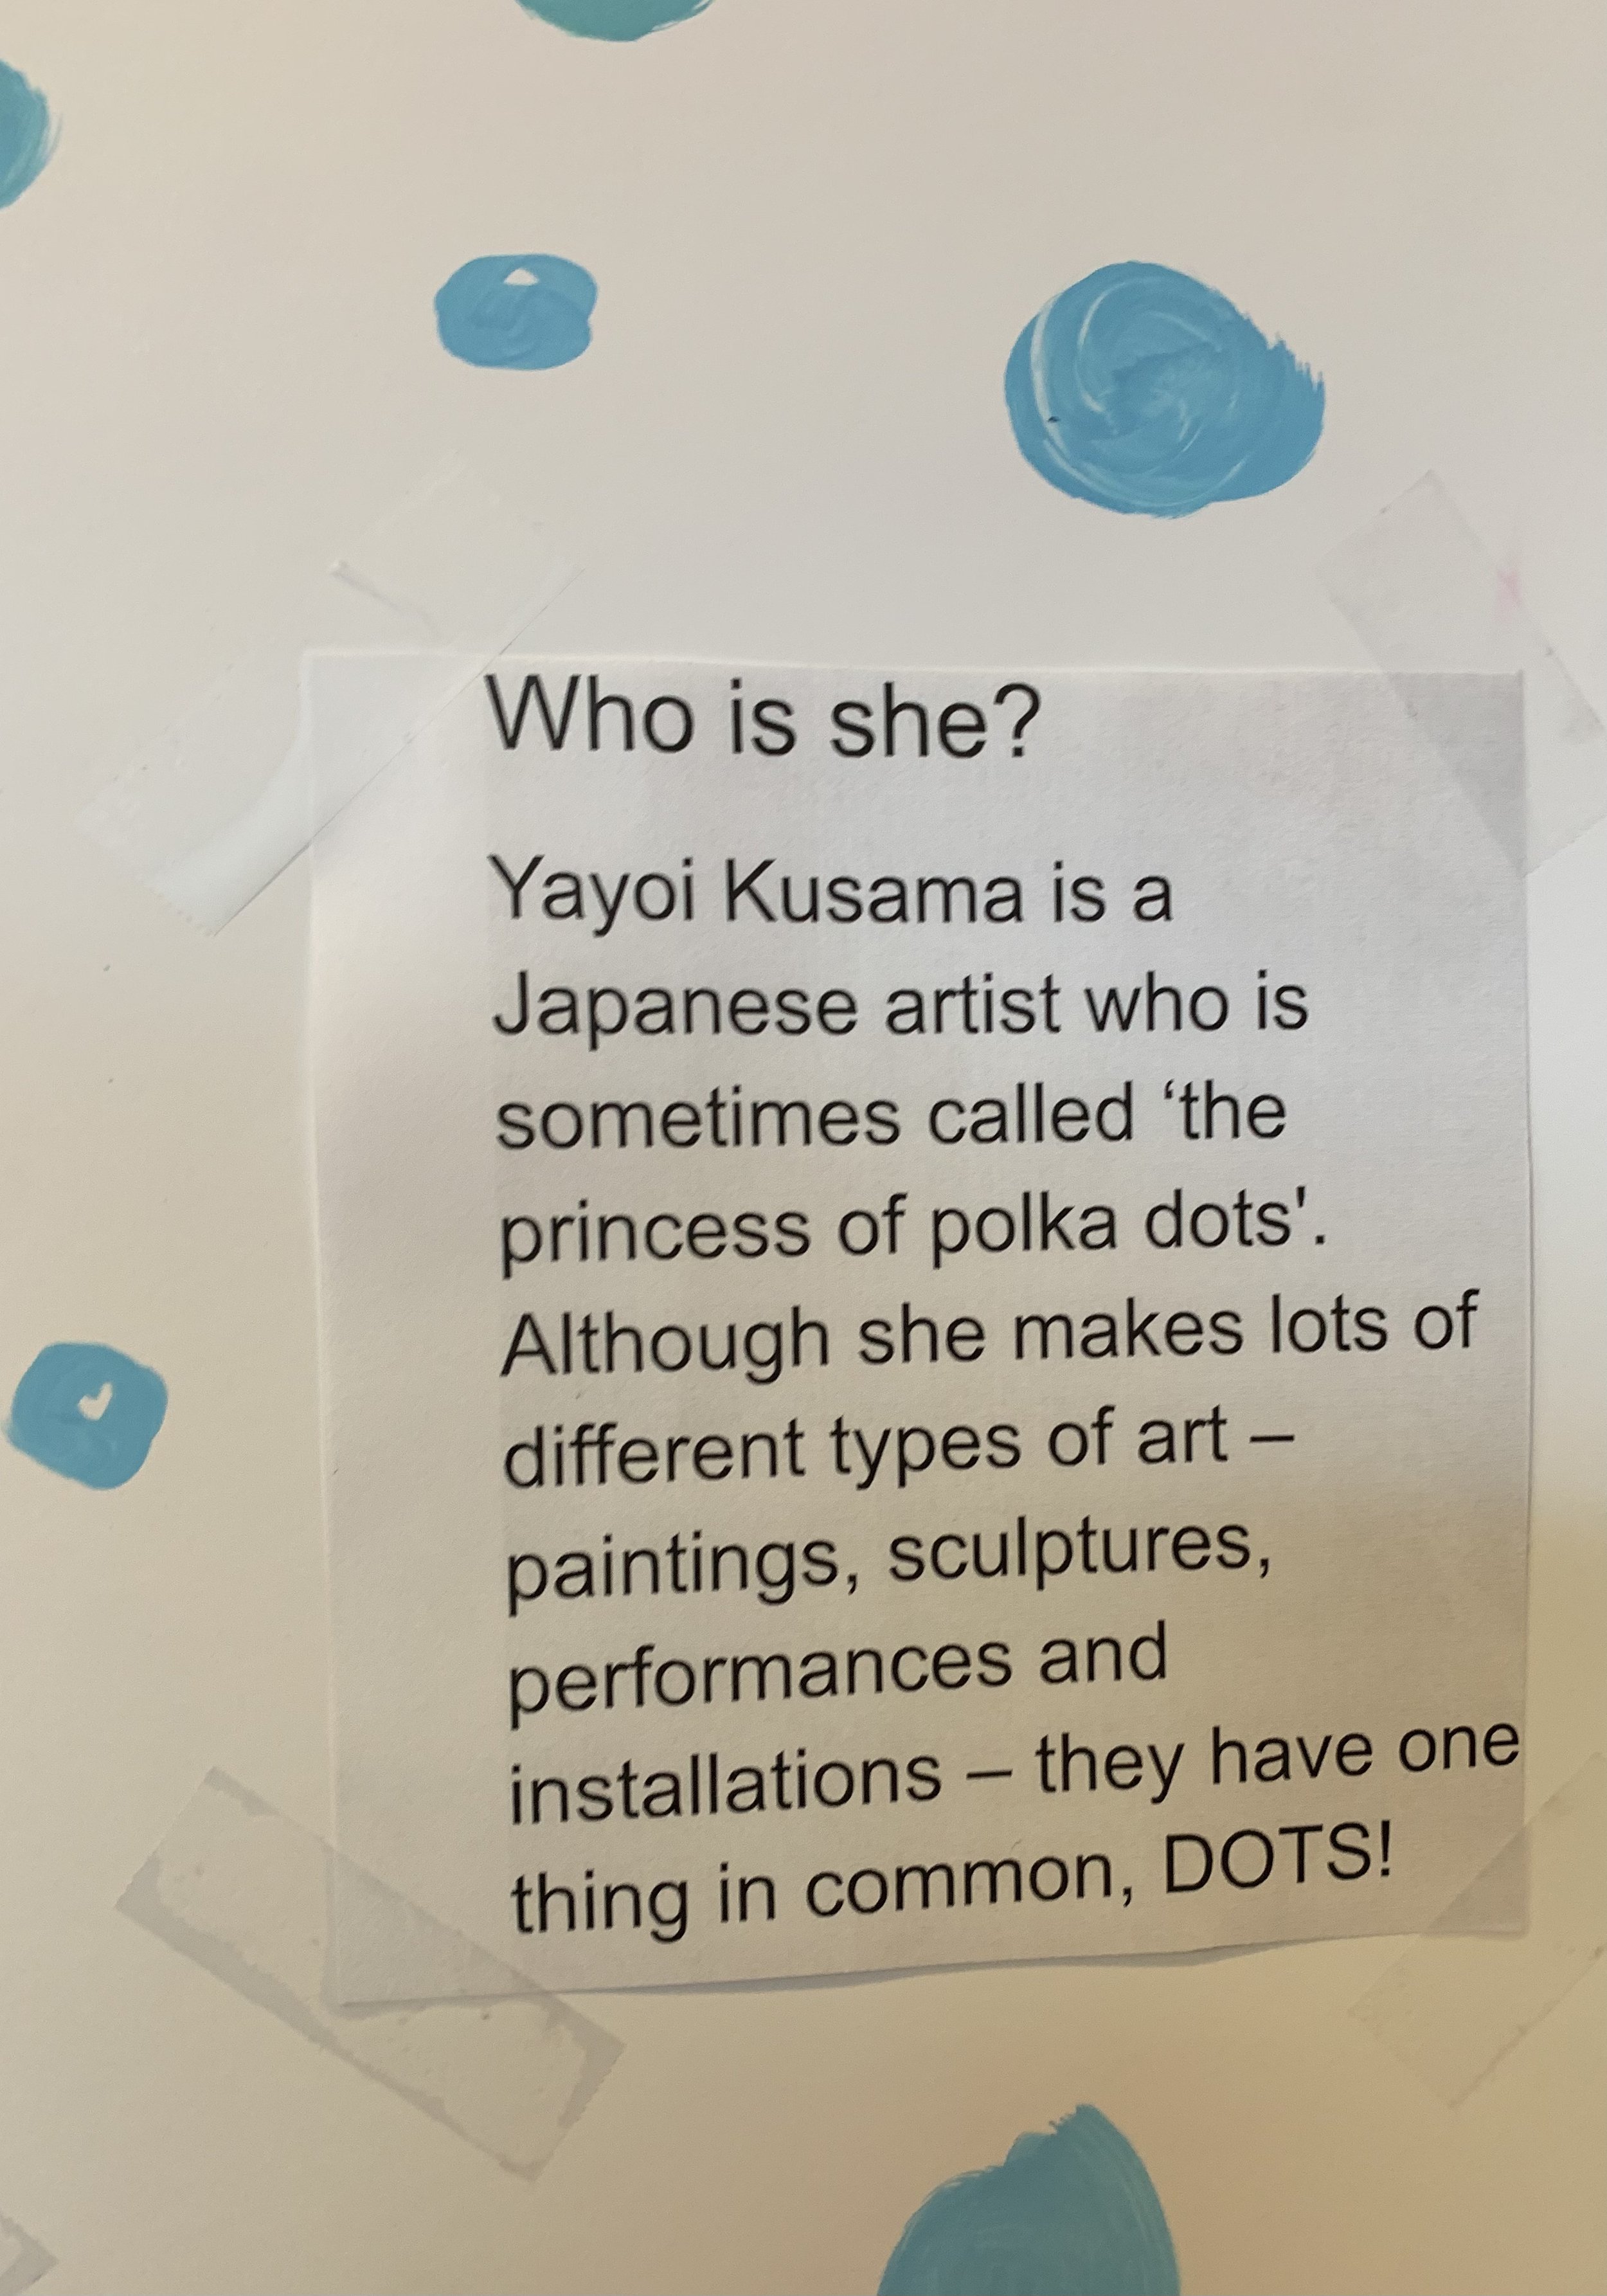 Who is Yayoi Kusama?